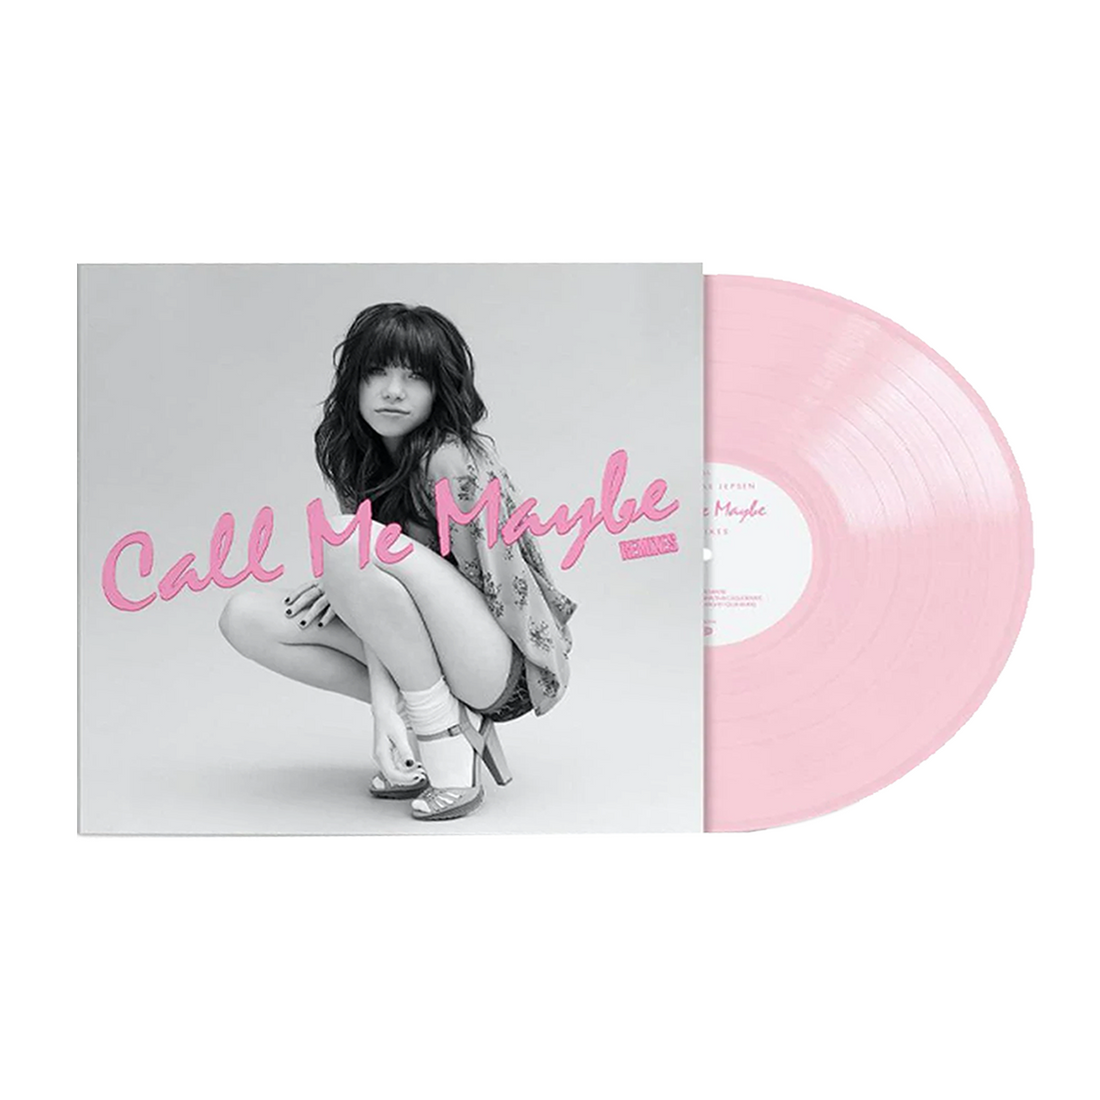 Call Me Maybe Remixes Vinyl